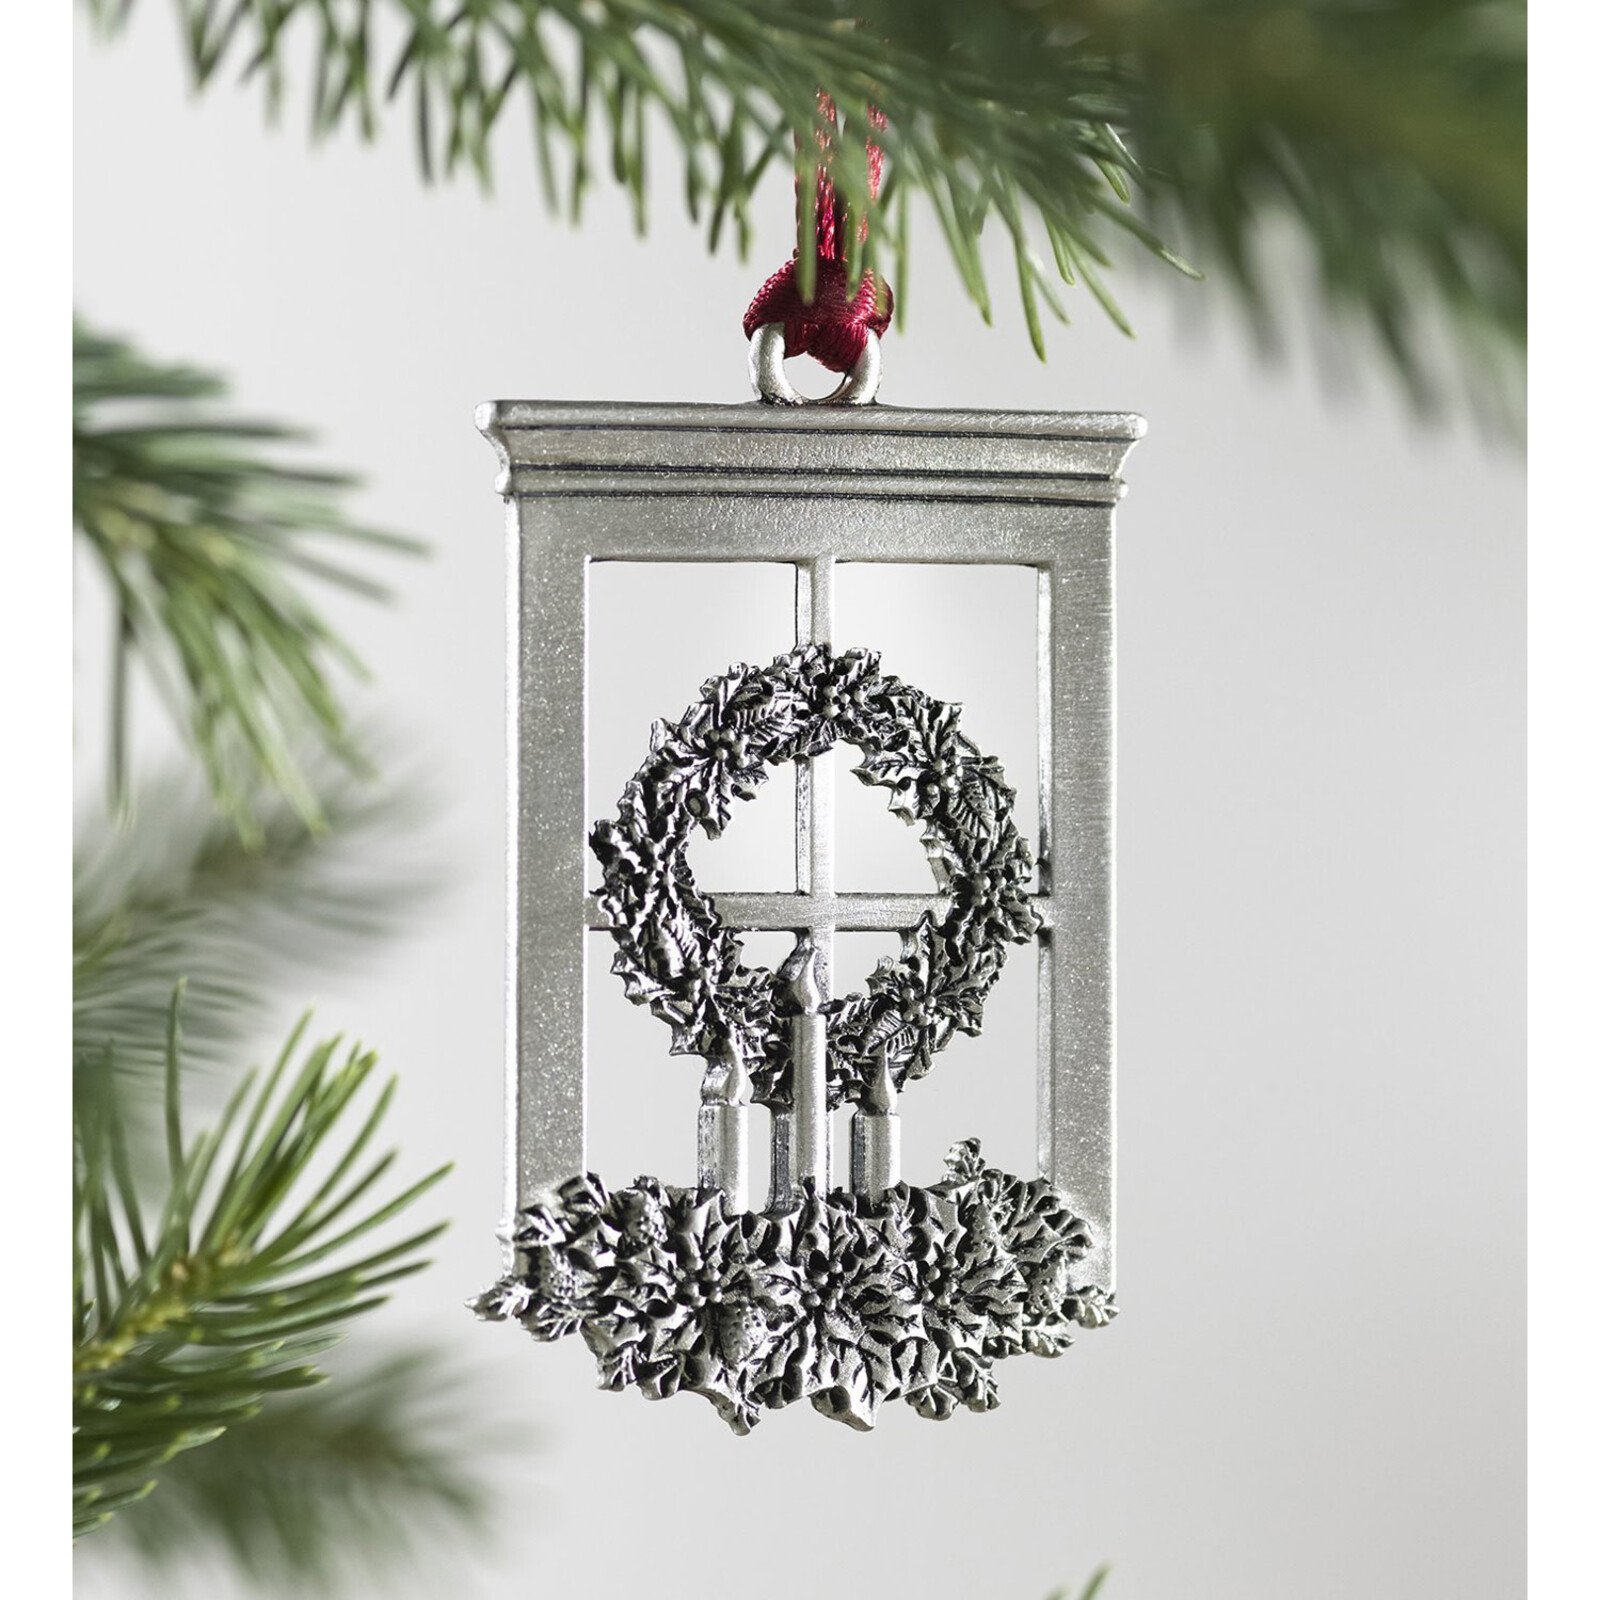 Evergreen Enterprises Solid  Pewter Christmas Tree Ornament WINDOW 65M27WIN loading=